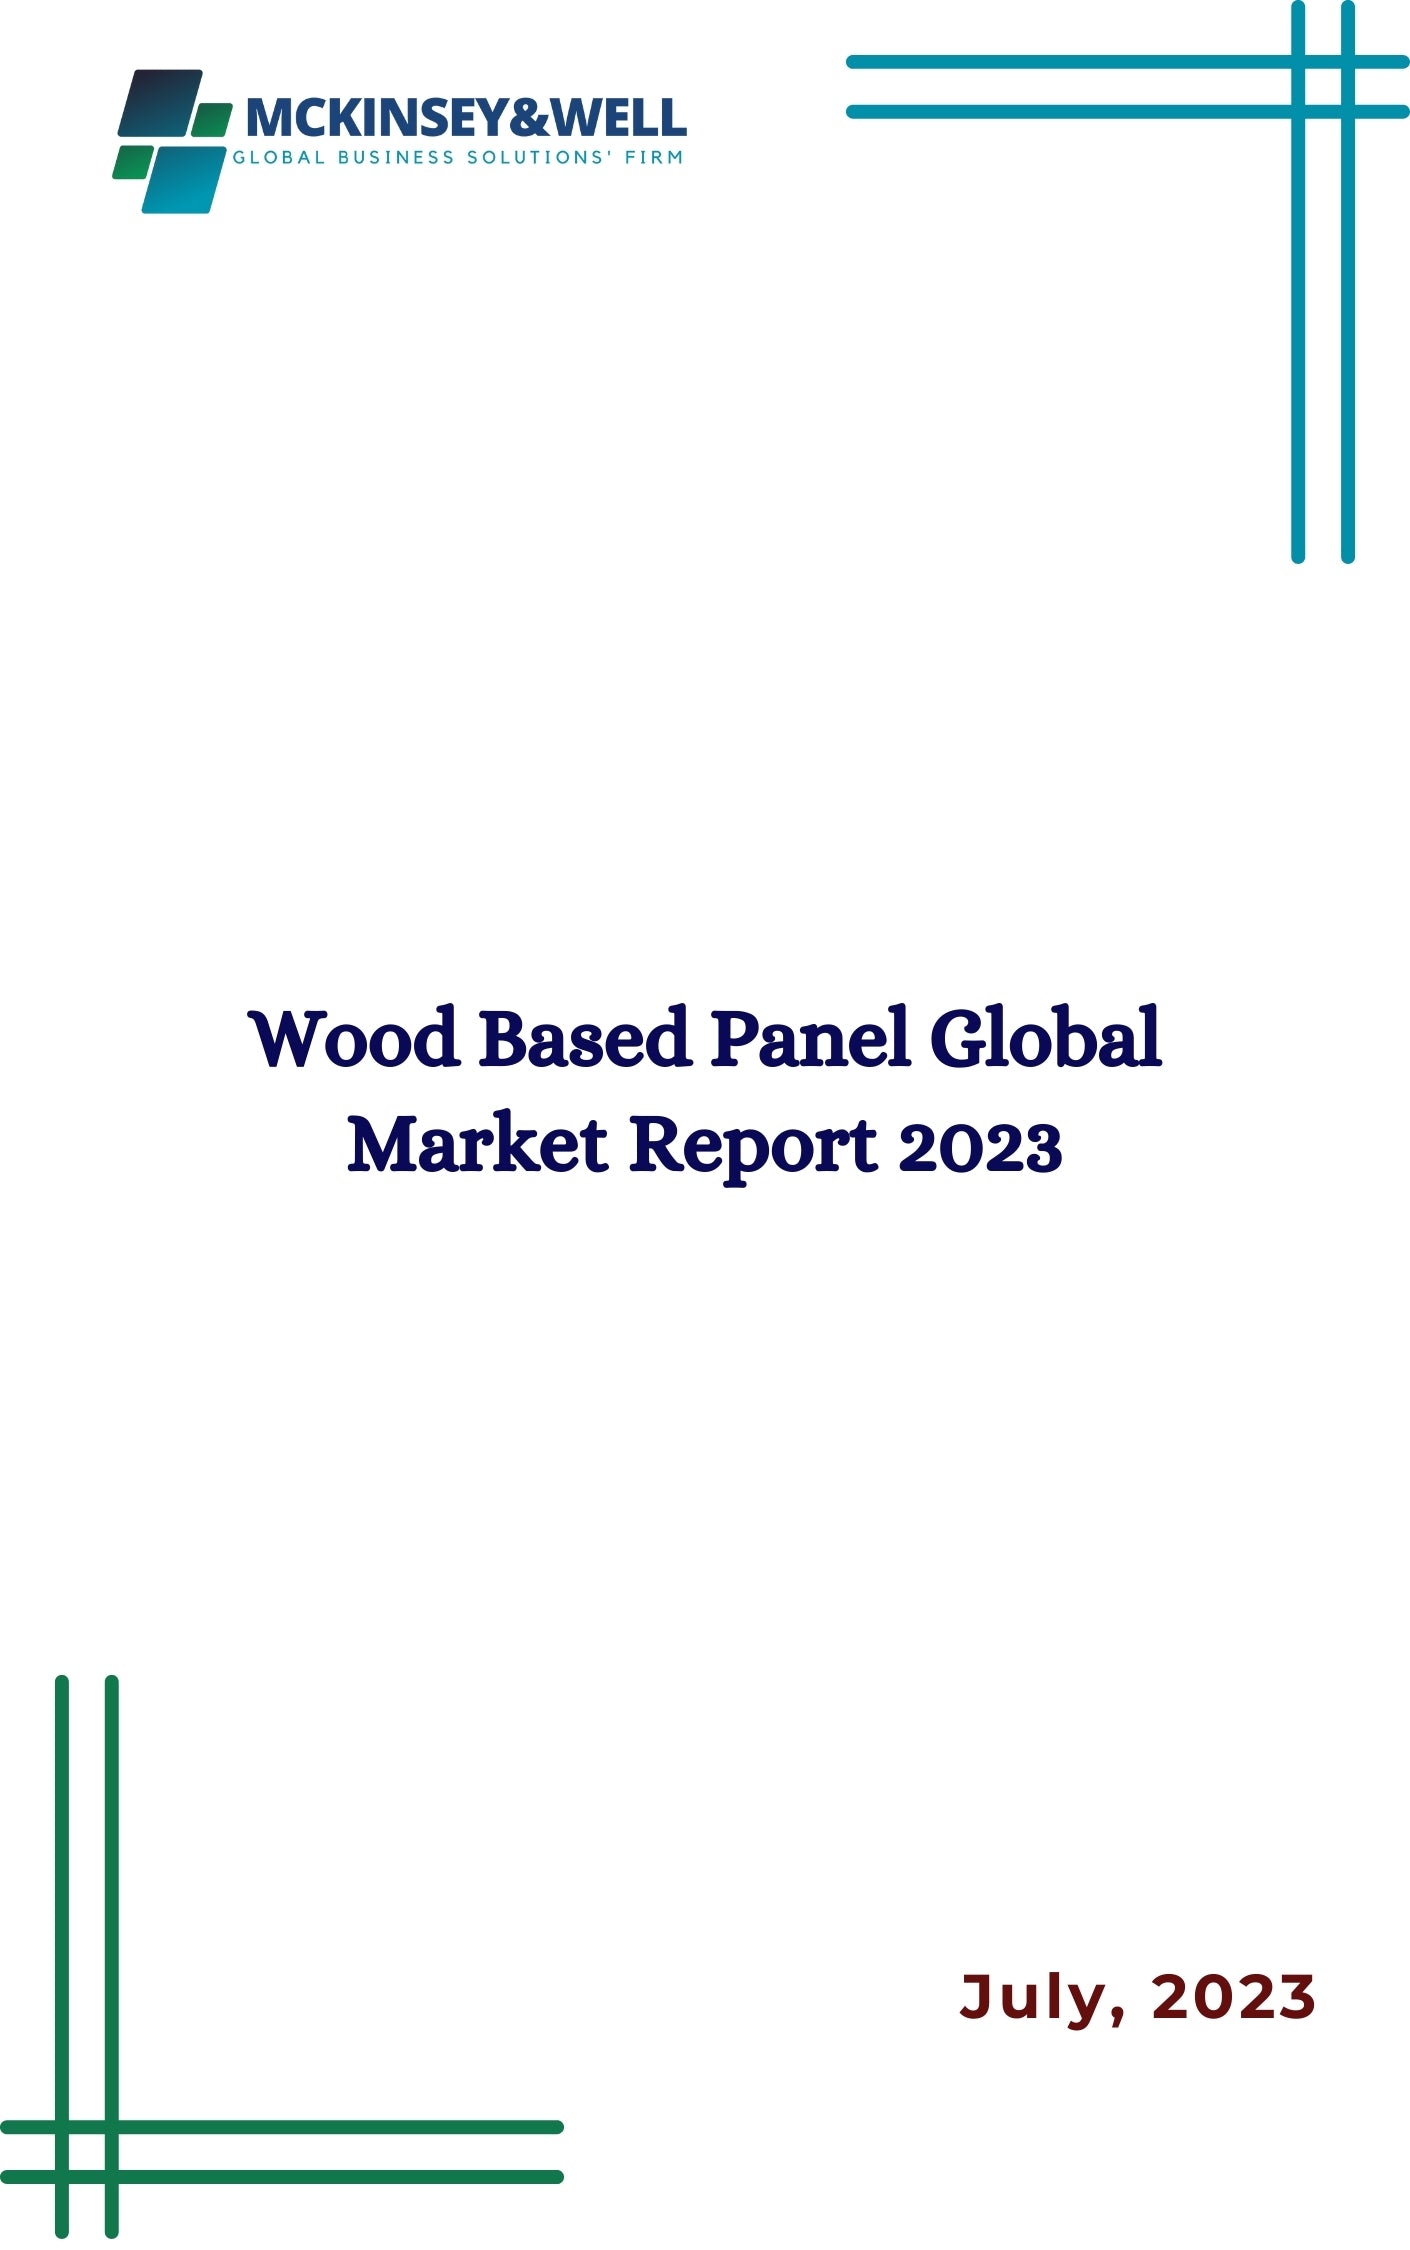 Wood Based Panel Global Market Report 2023